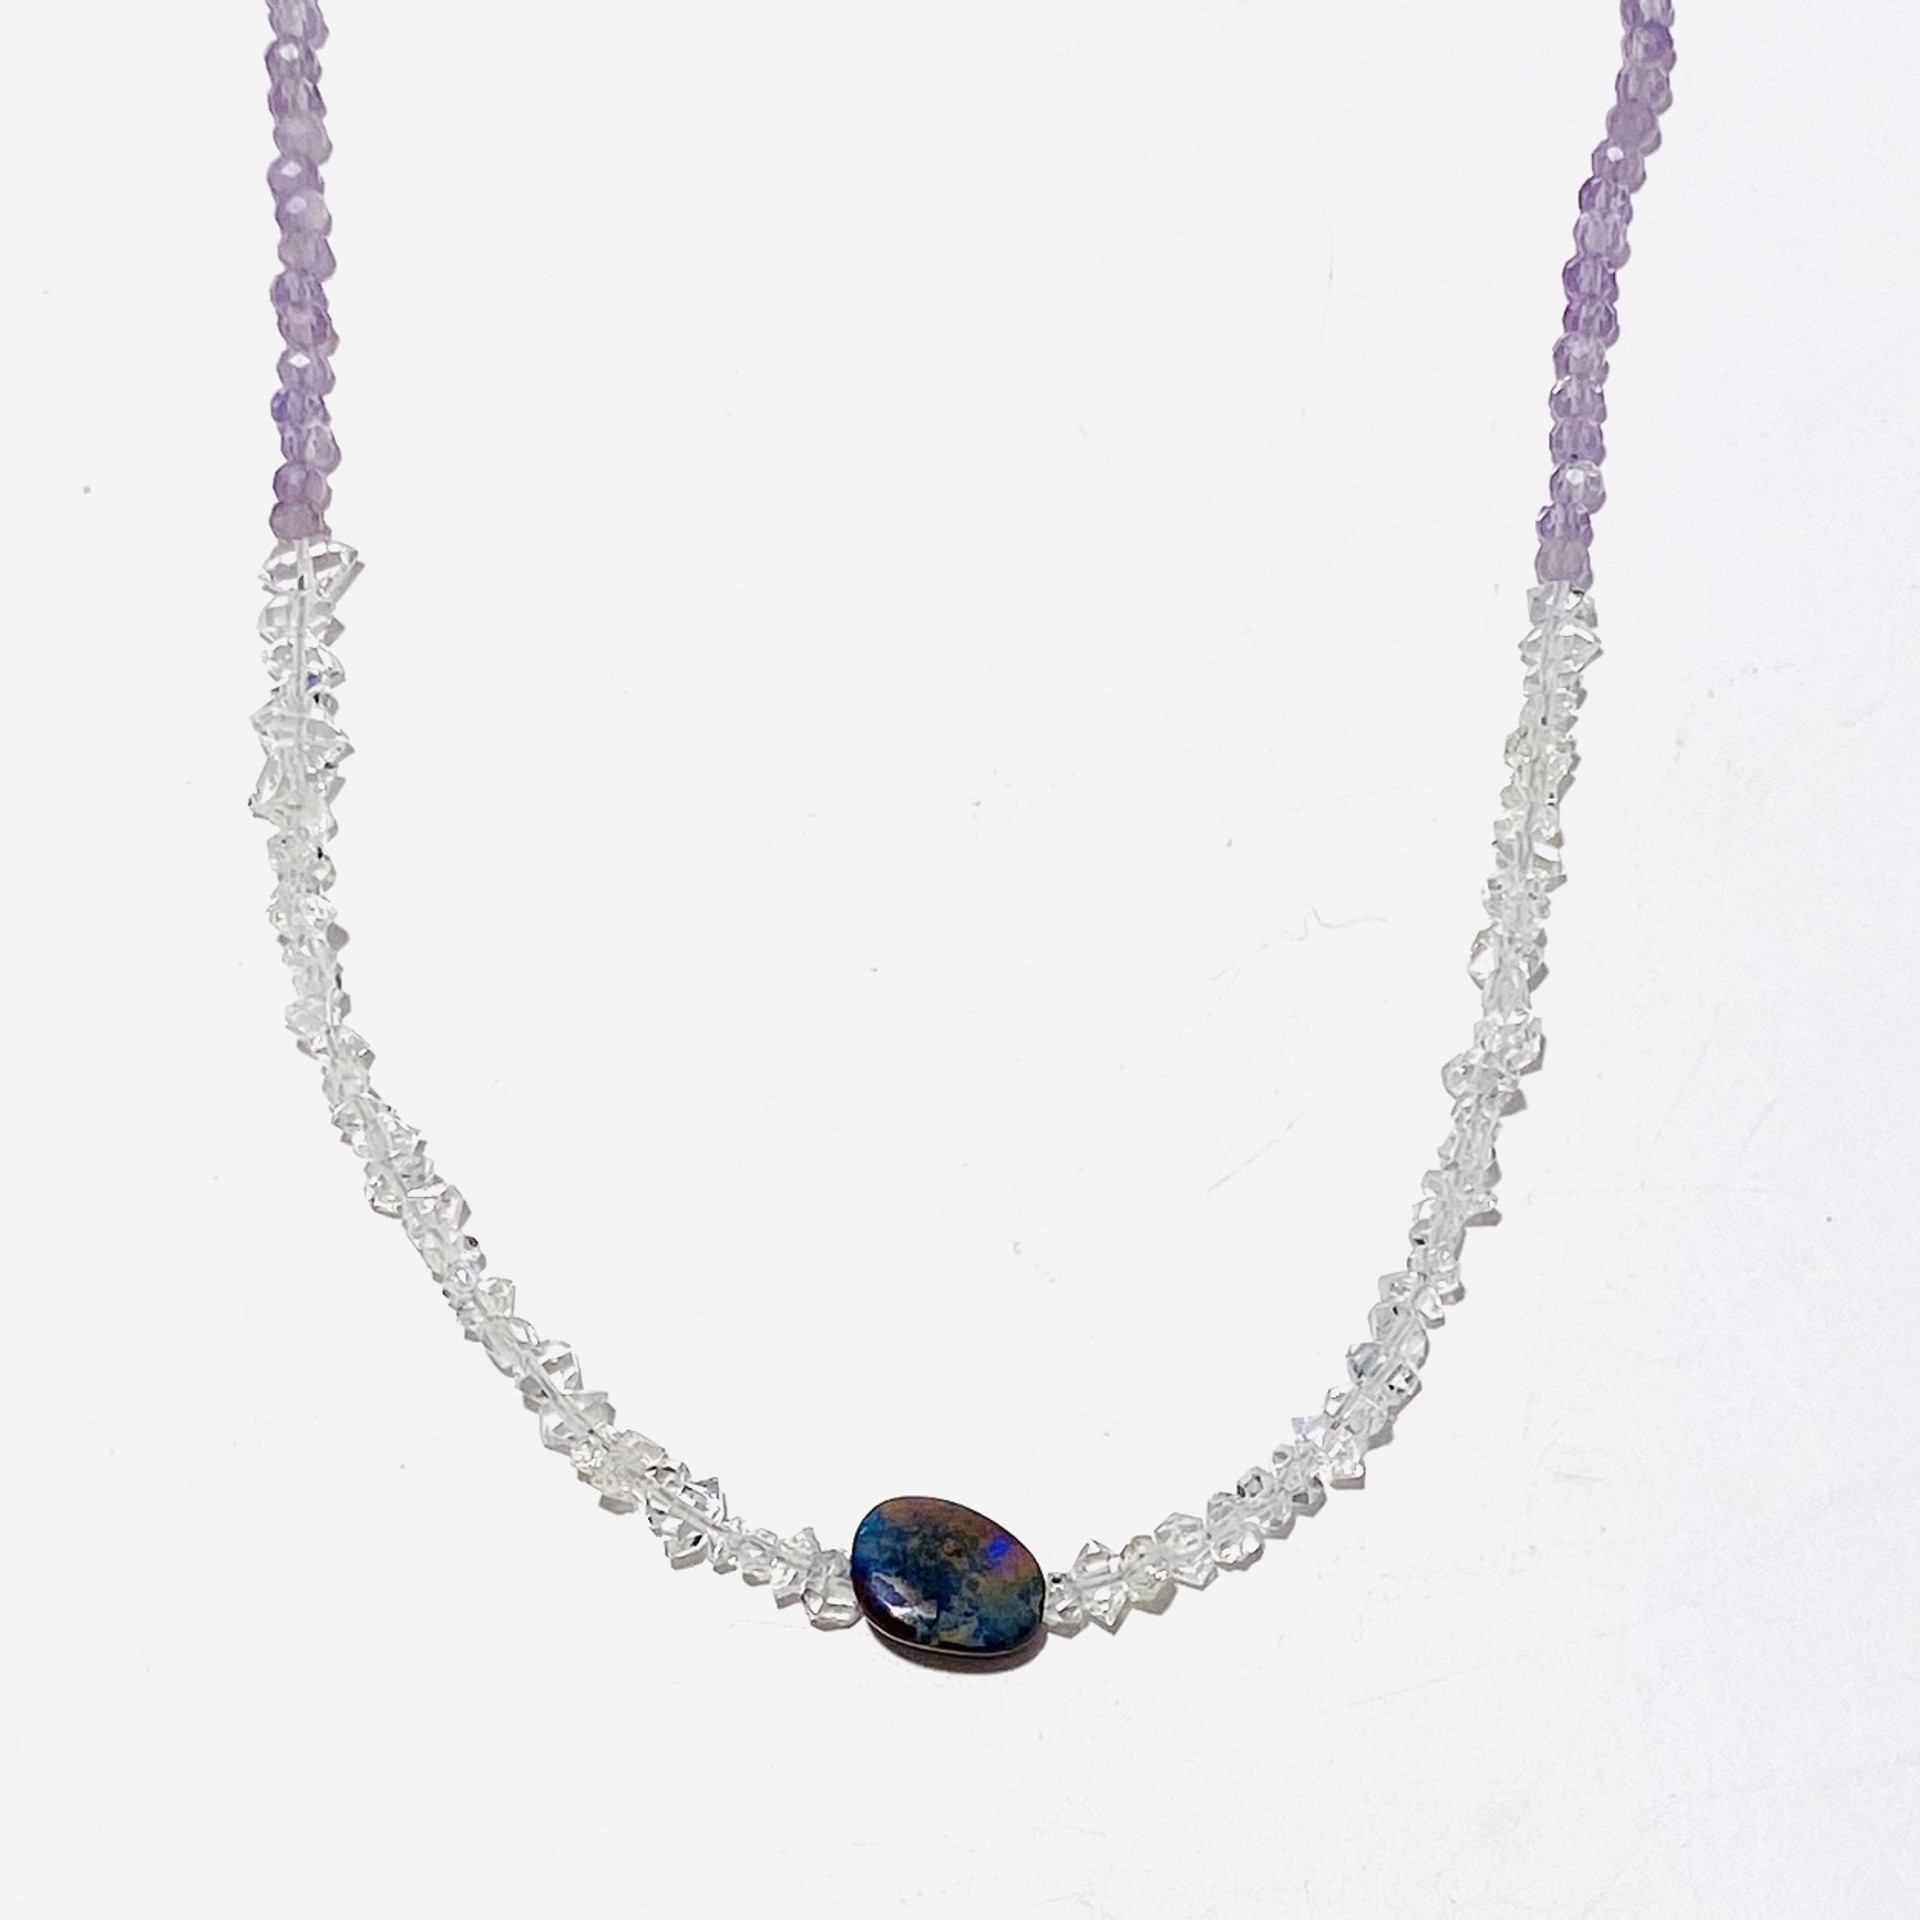 Tiny Pink Amethyst Herkimer Diamond Australian Opal Necklace by Nance Trueworthy